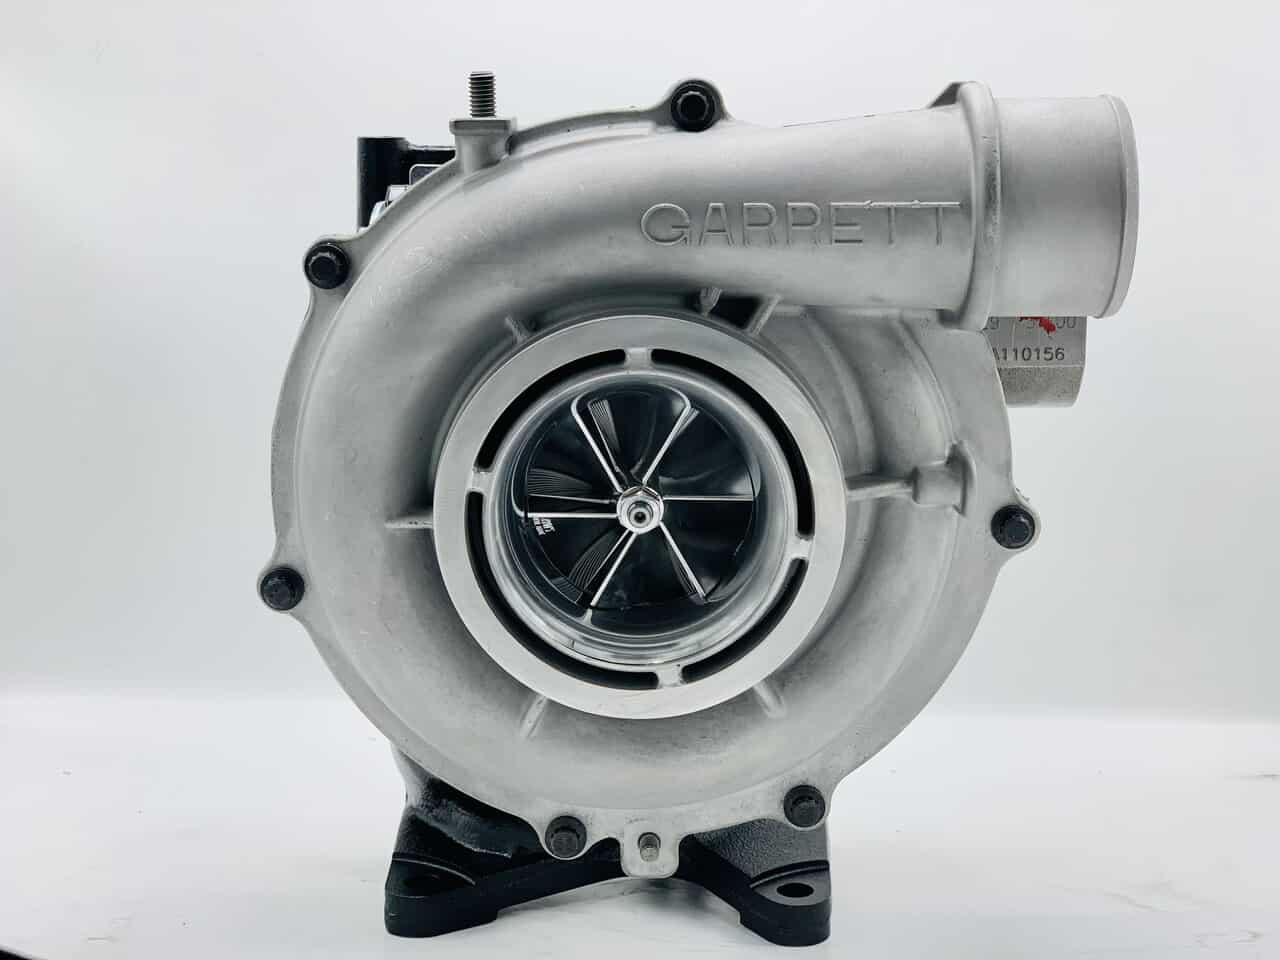 68mm turbo